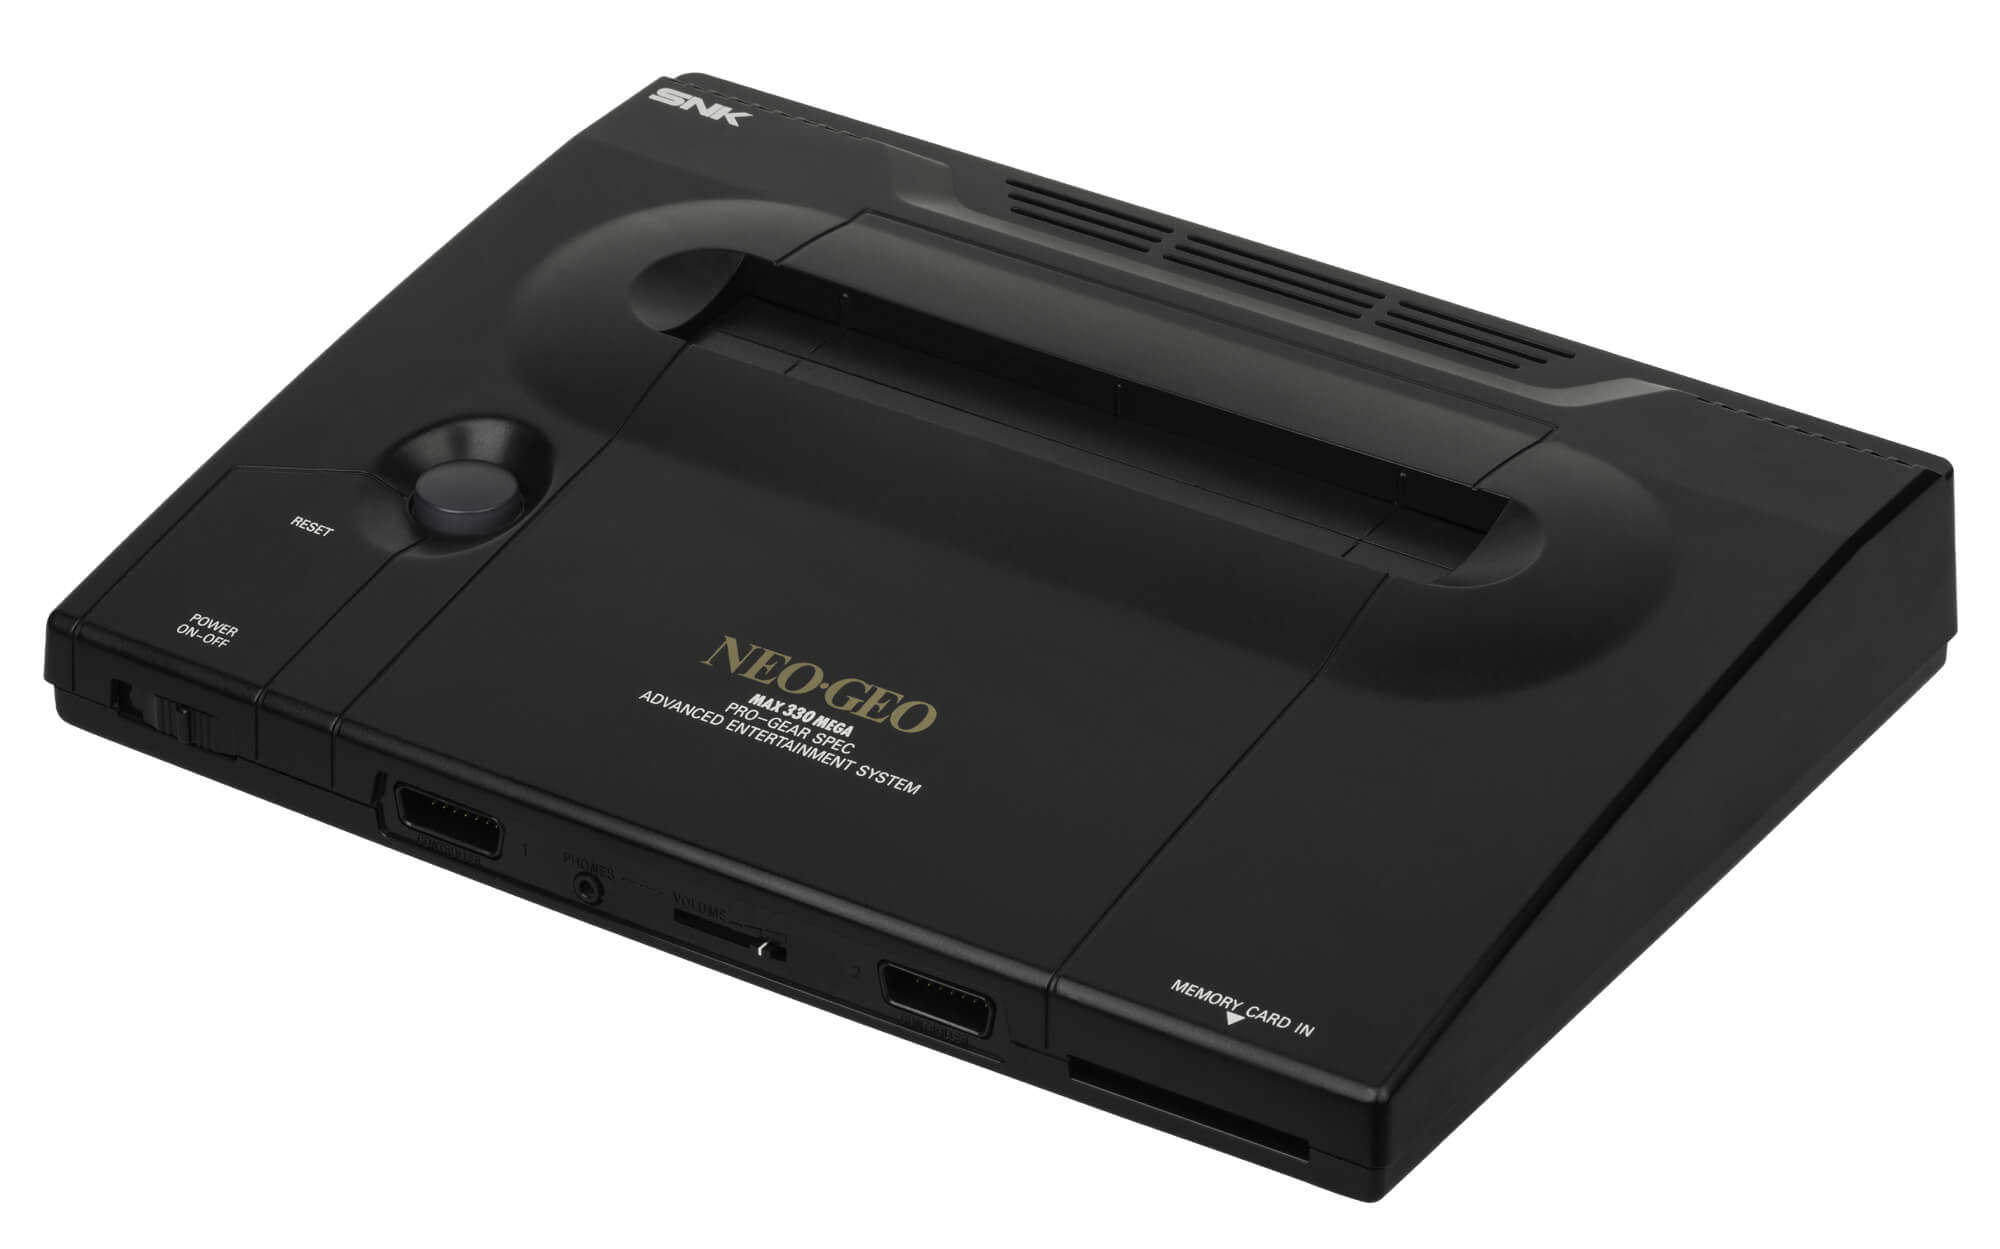 Consola Retro SNK Neo Geo Mini (40 juegos). Electronica